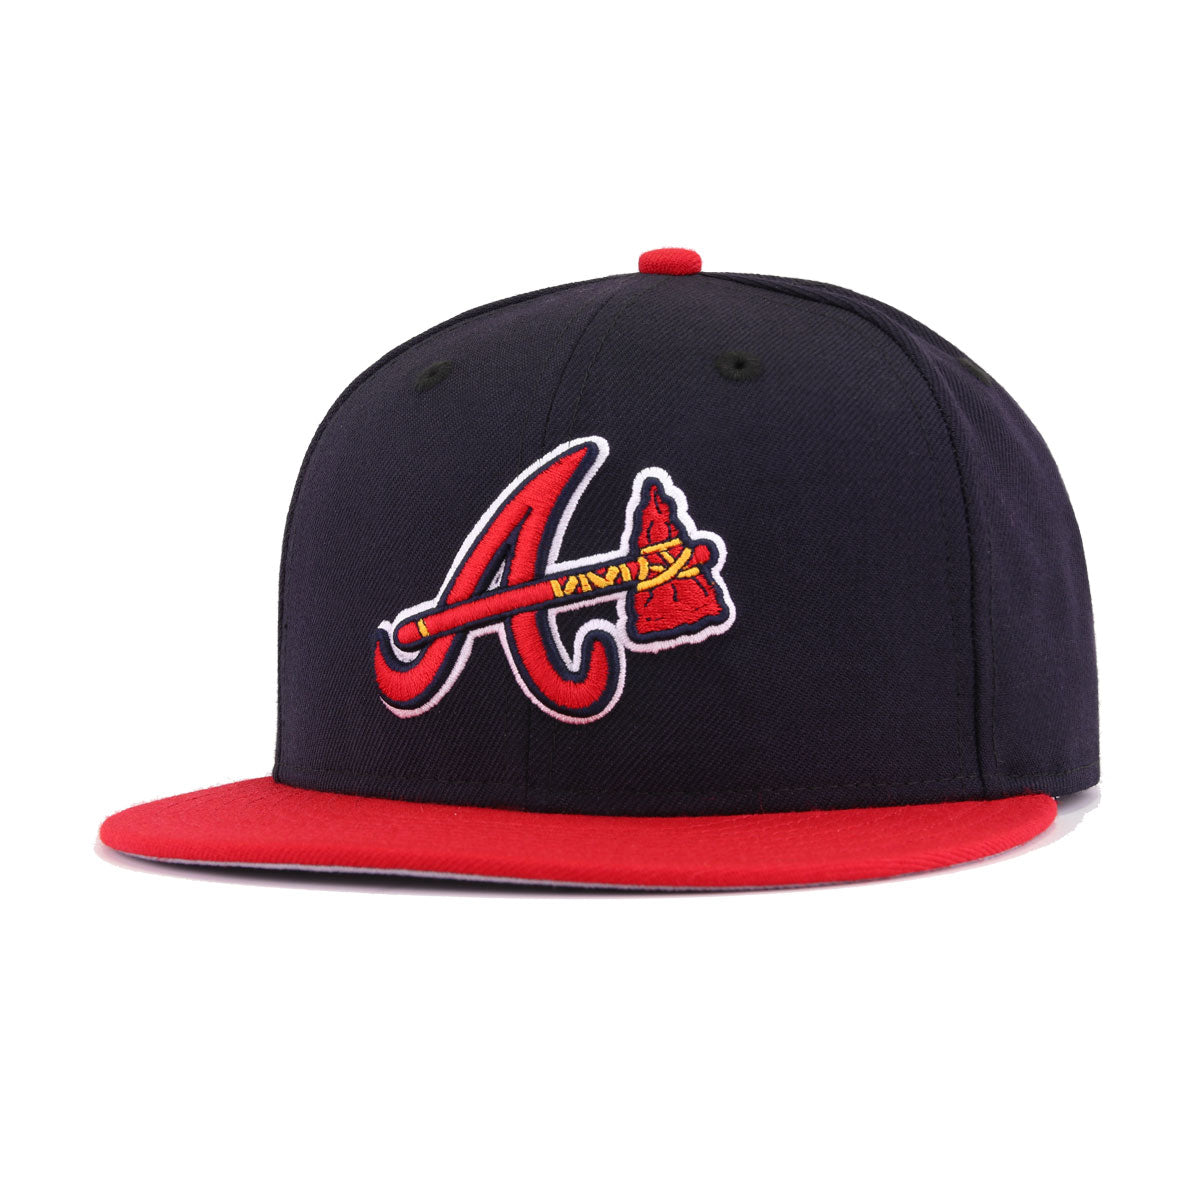 Red White & Blue Atlanta Tomahawk Chop Hat Baseball Trucker 